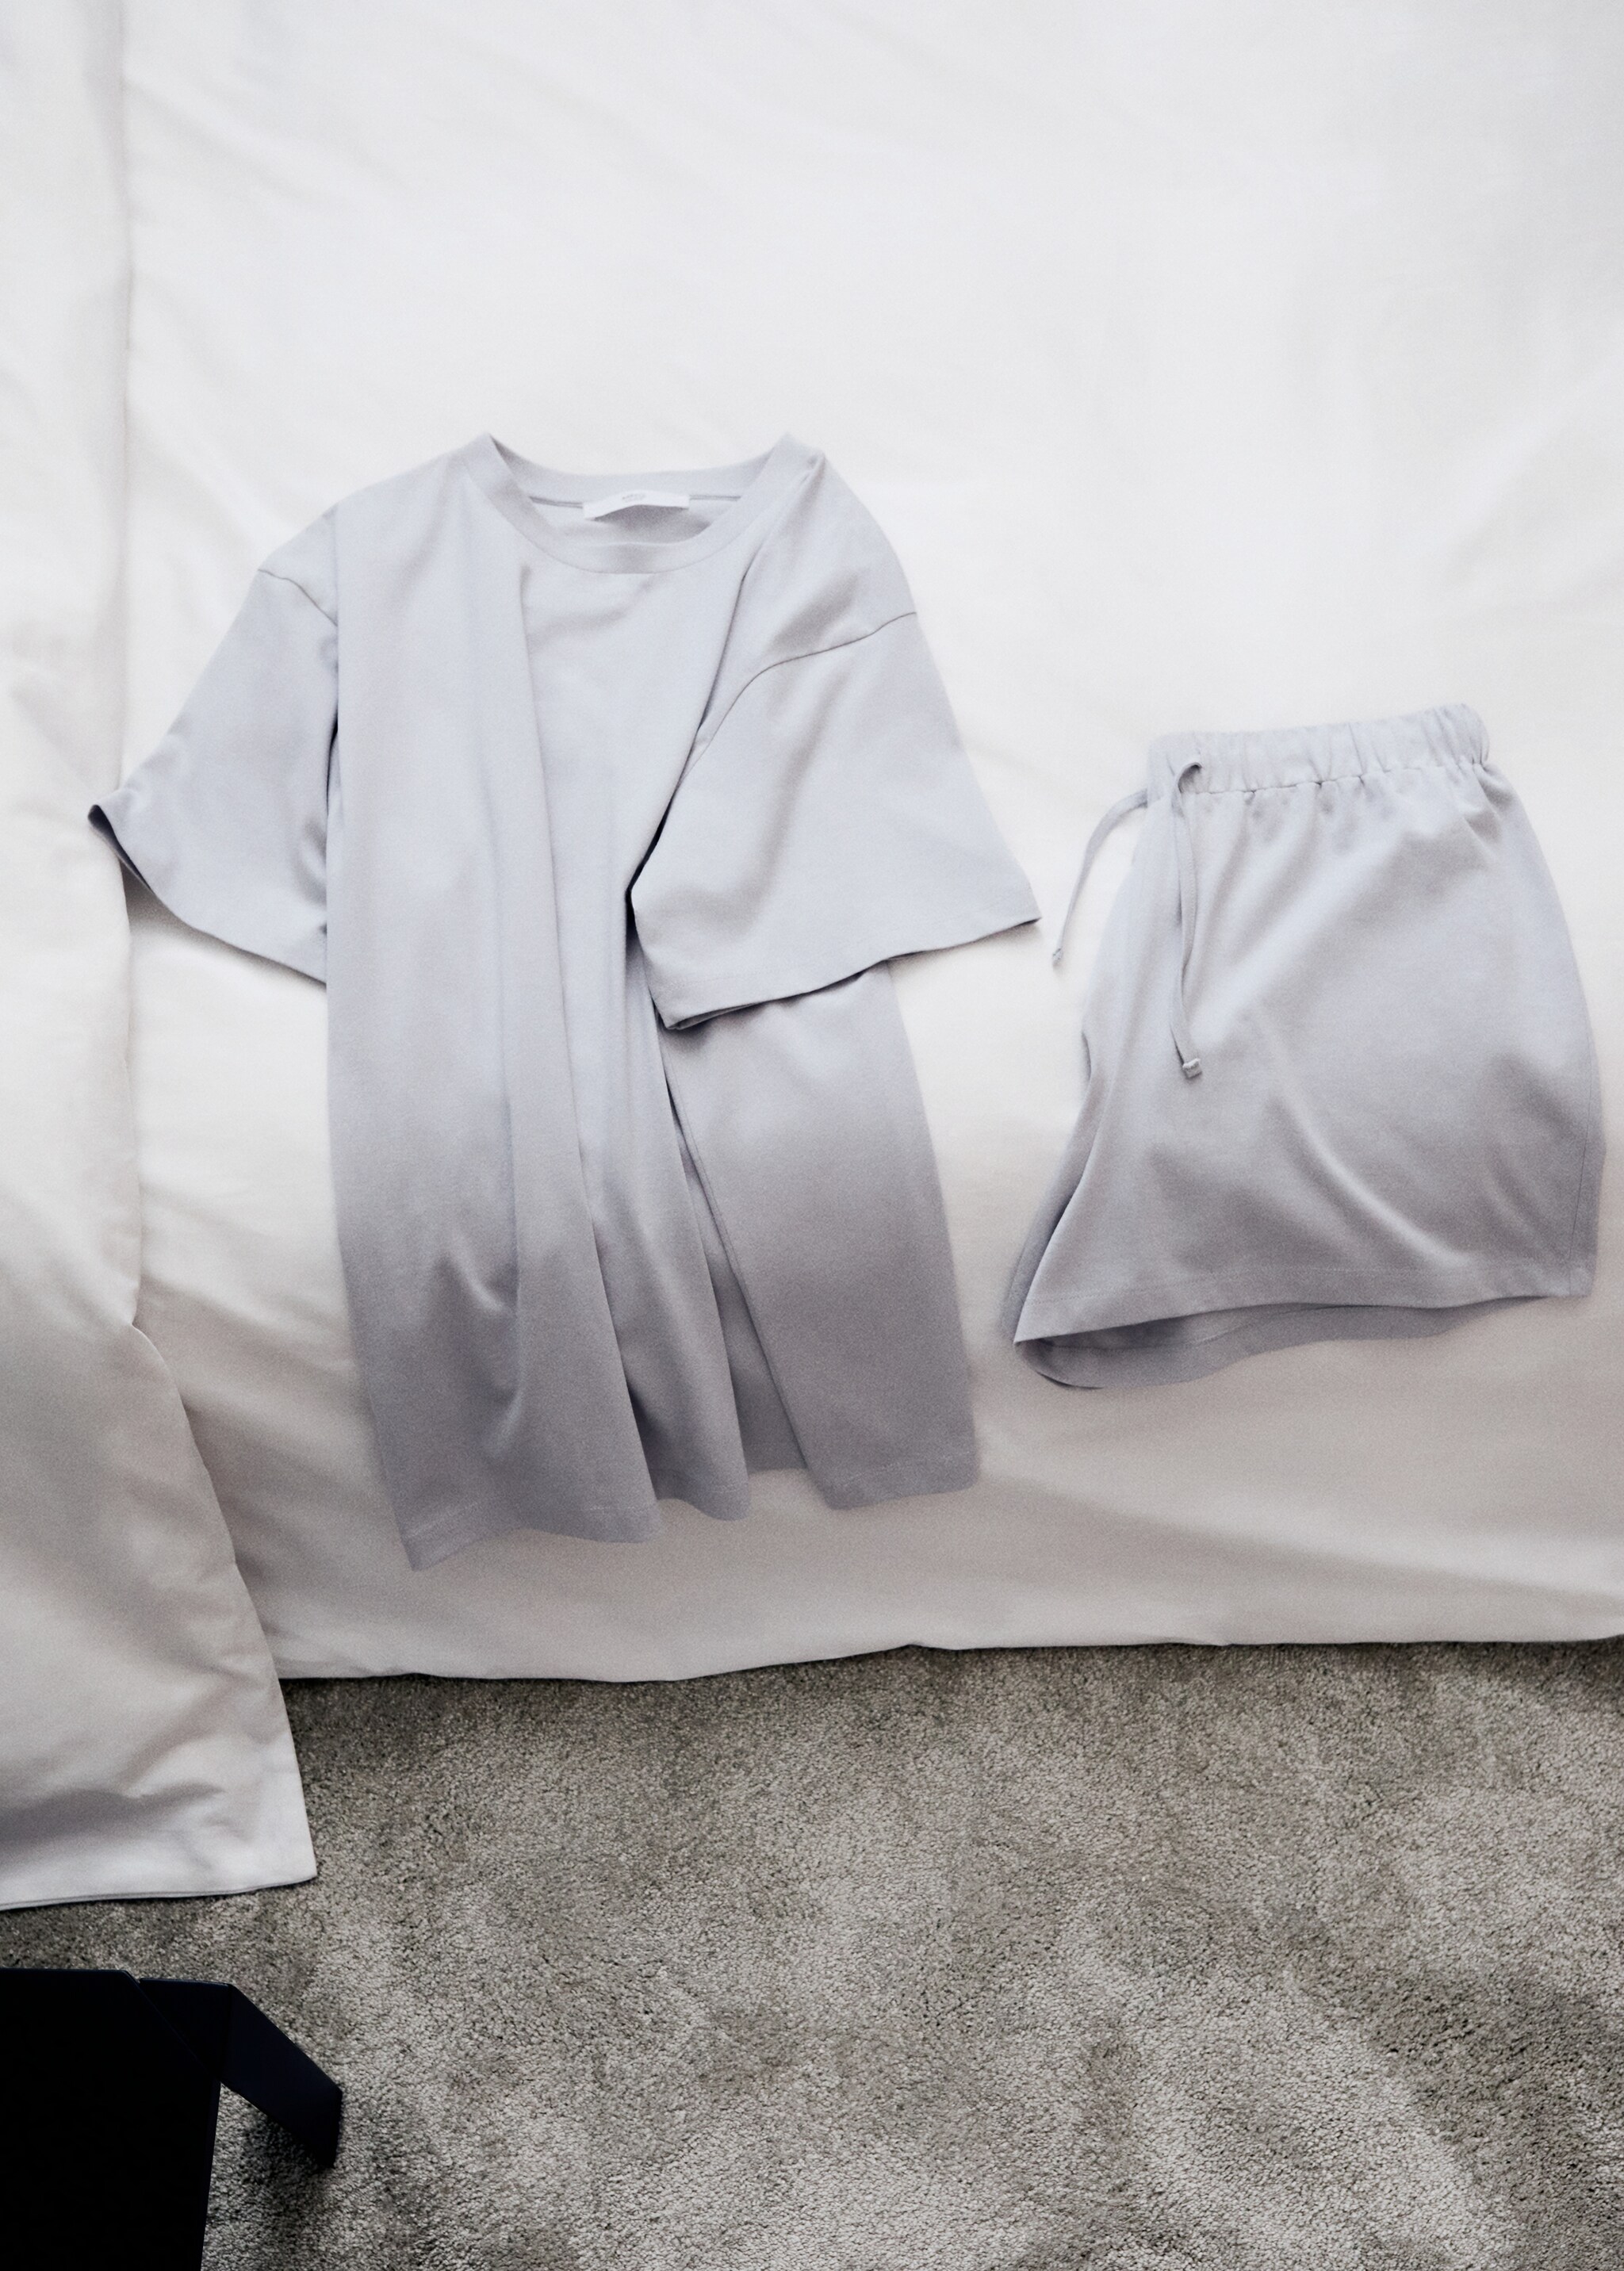 Short two-piece cotton pyjamas - Details of the article 6